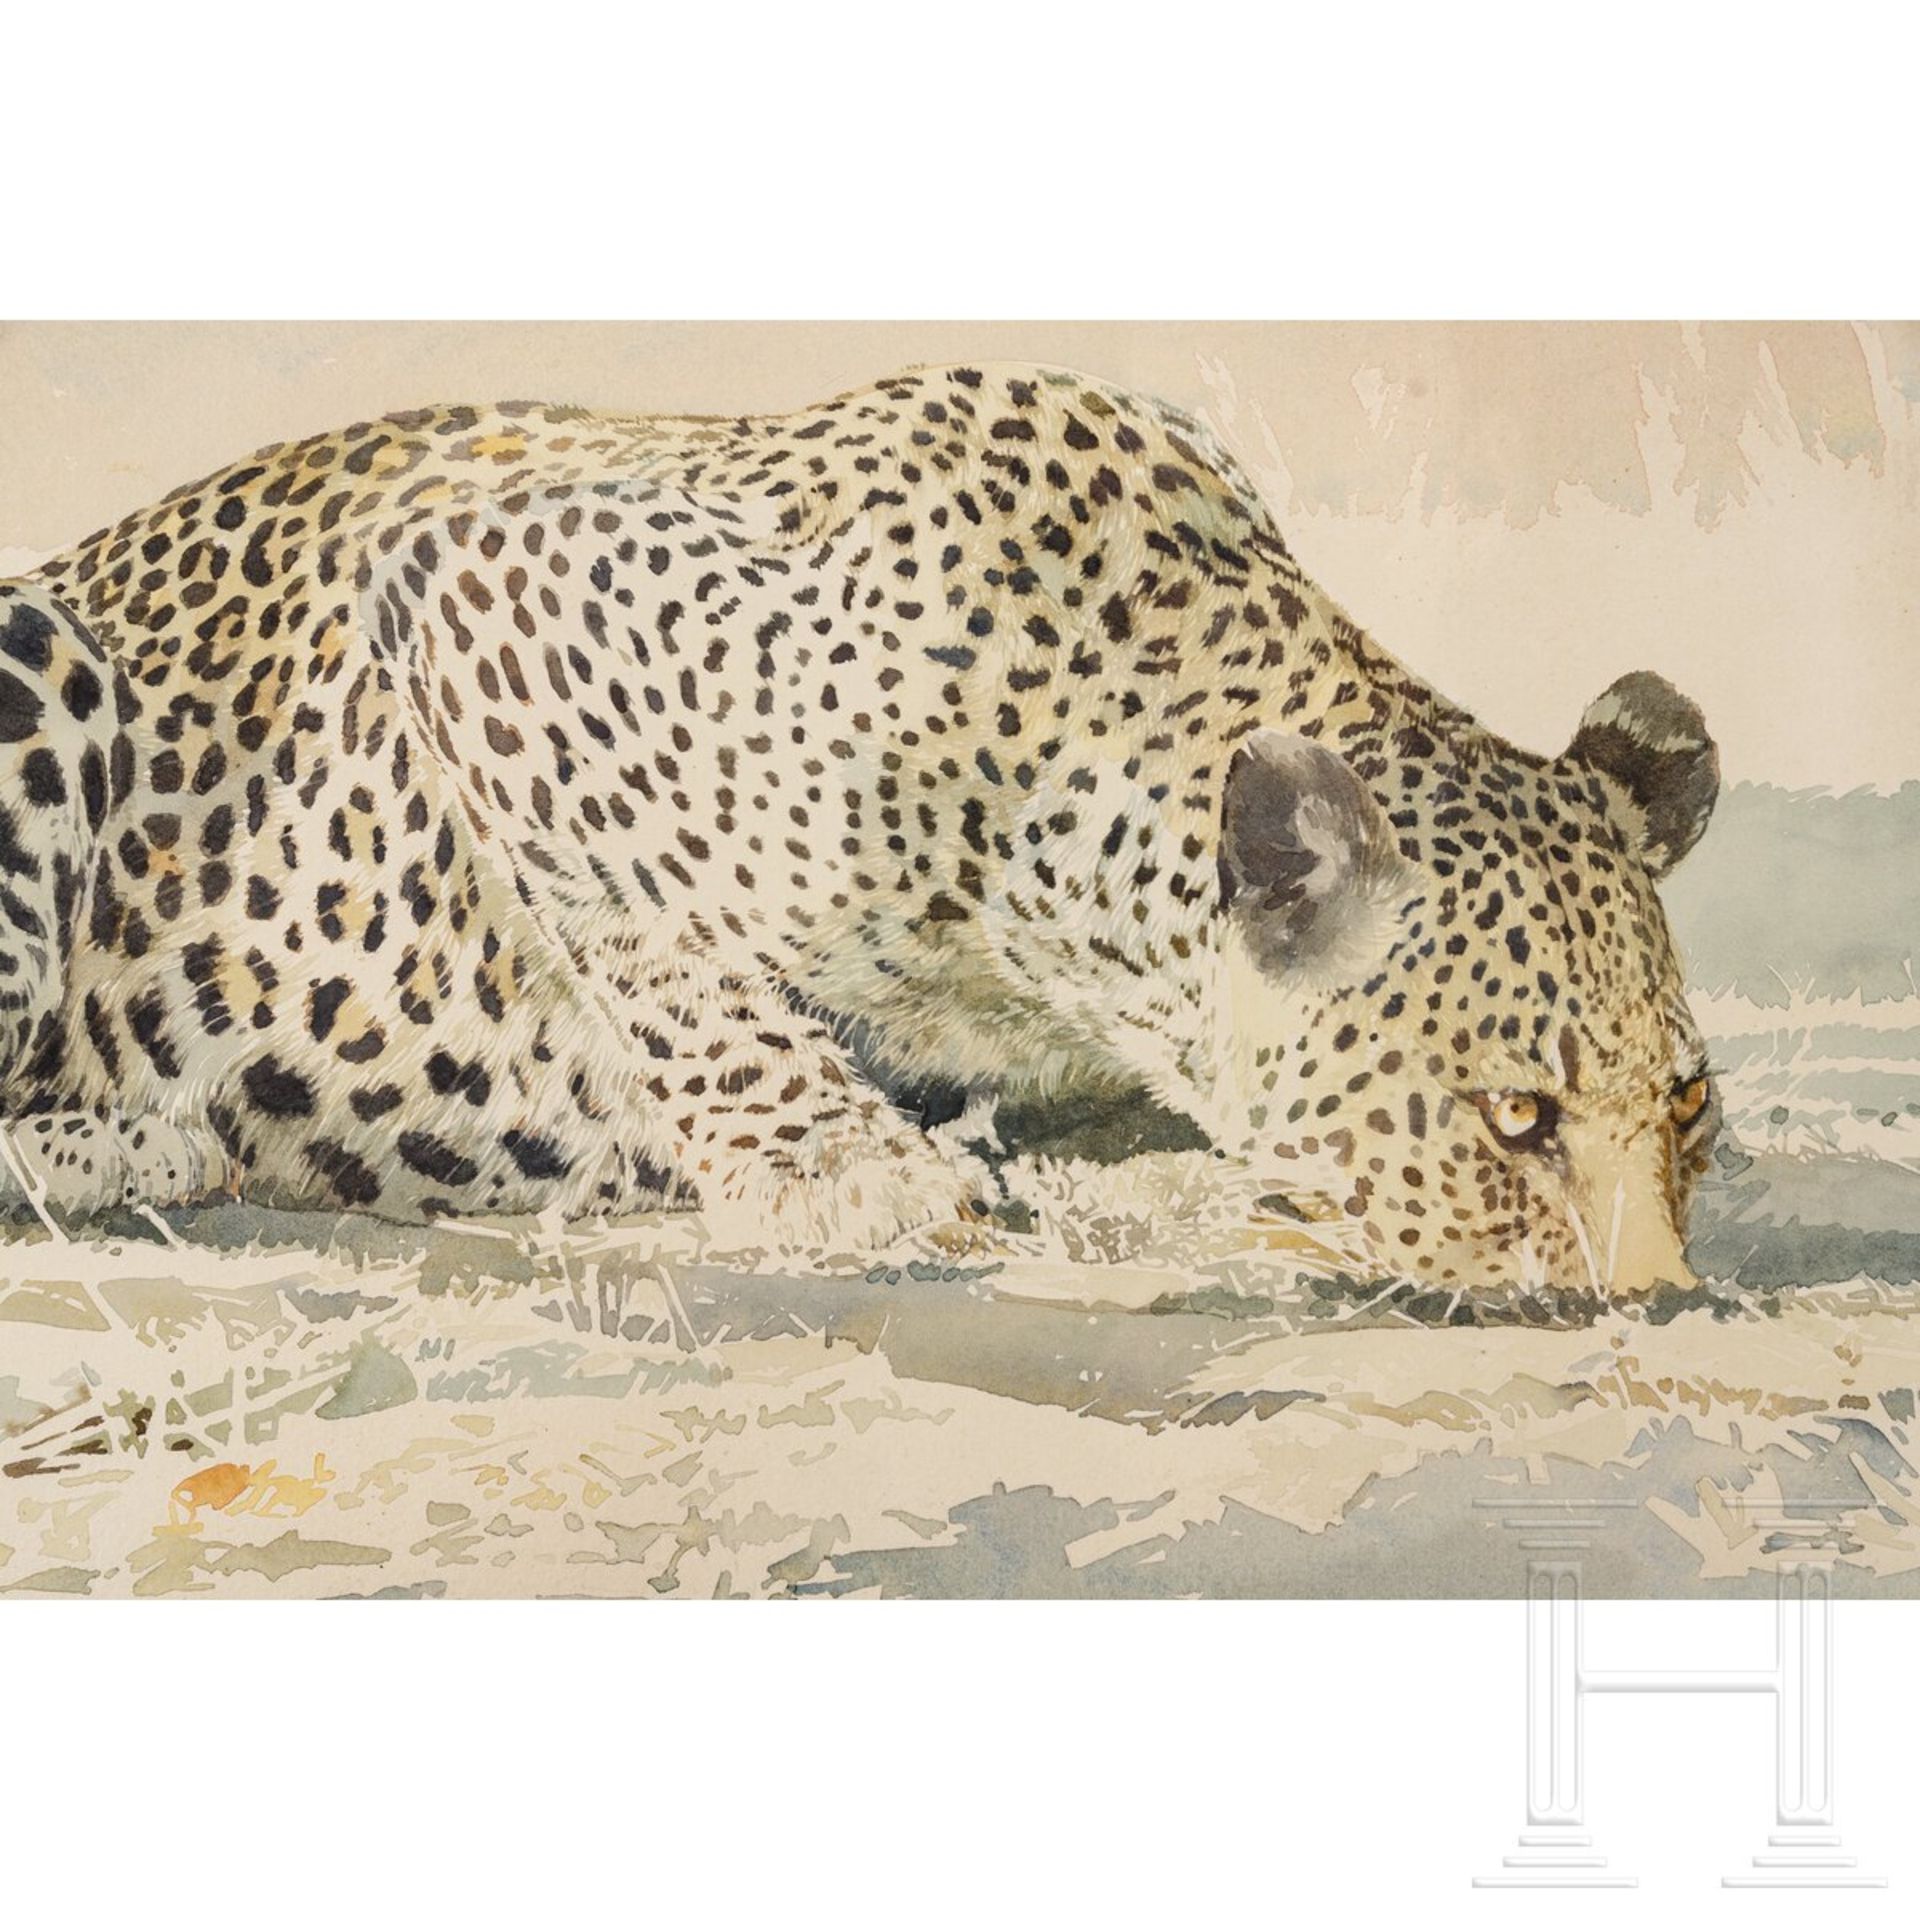 Leigh Voight, "Leopard drinking", Südafrika, datiert 1997 - Bild 2 aus 3